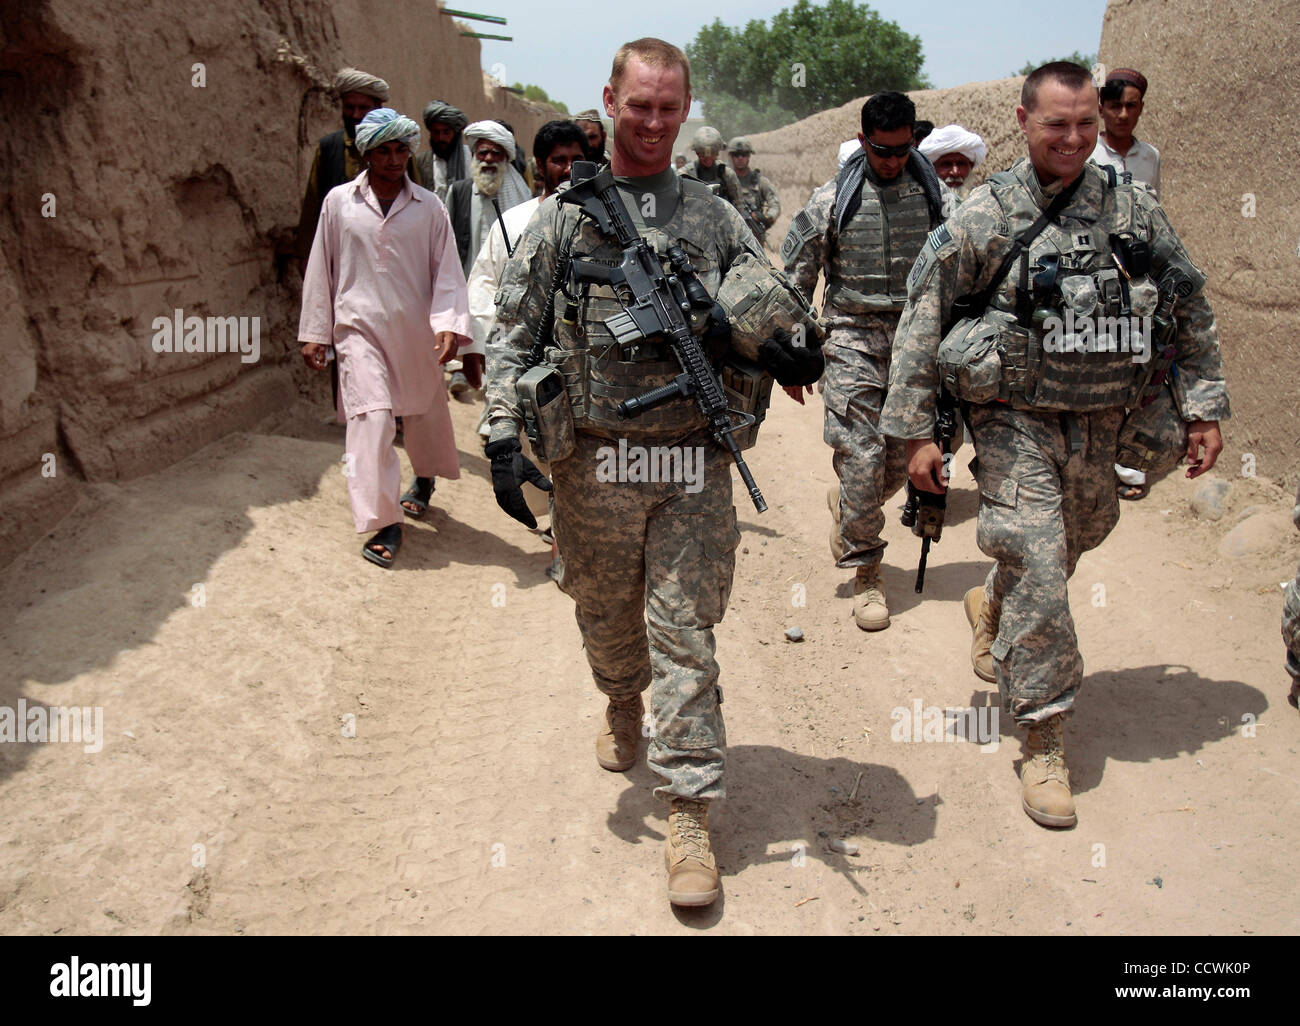 May 15, 2010 Herat Province, Afghanistan U.S. Army 1Lt. David Stock